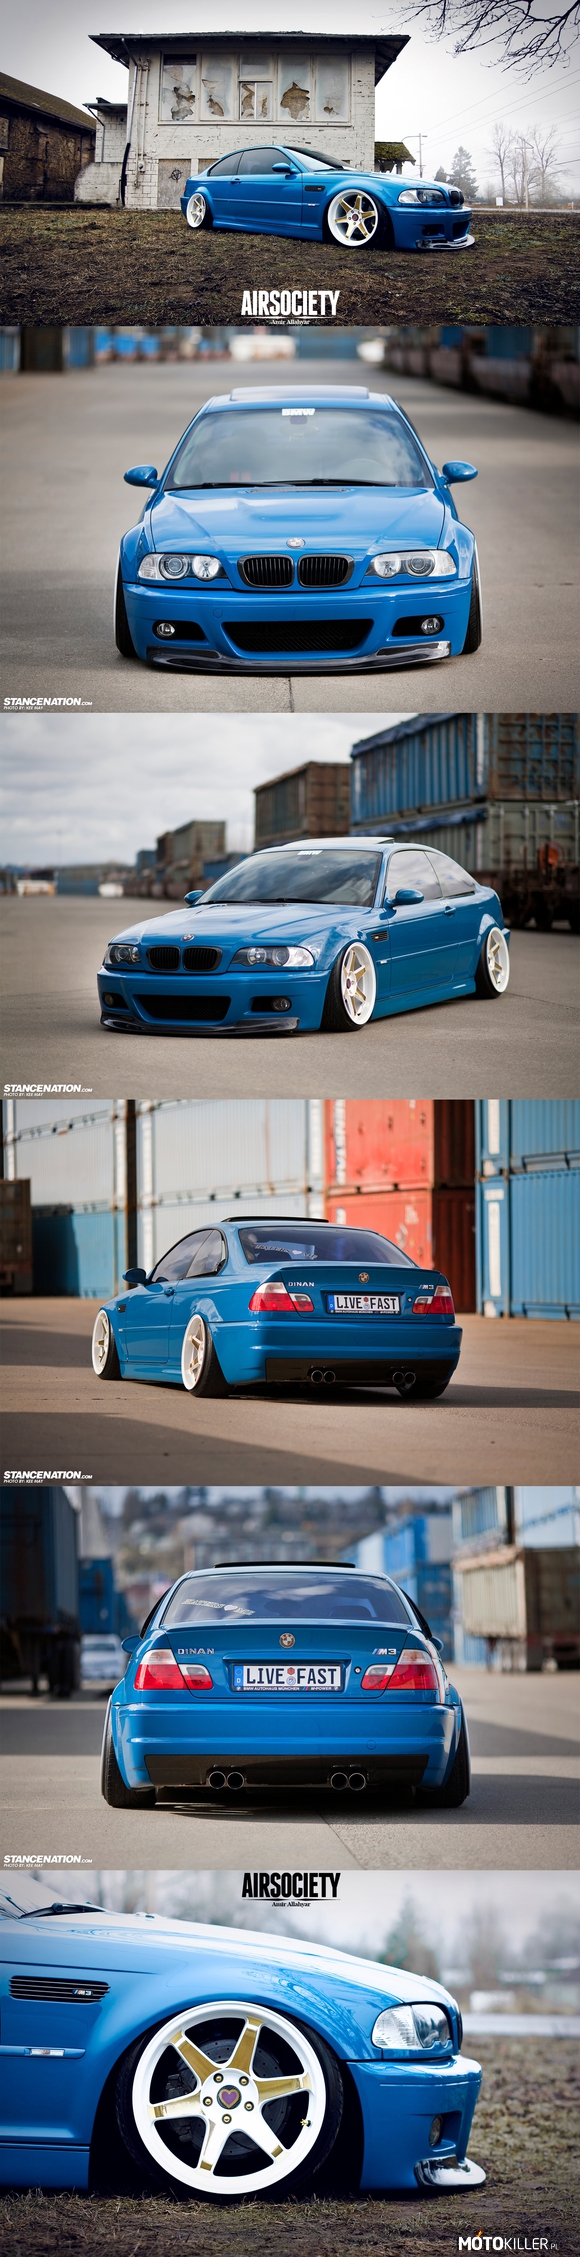 BMW ///M3 E46 DINAN – BMW ///M3 E46 DINAN LAGUNA SECA BLUE 